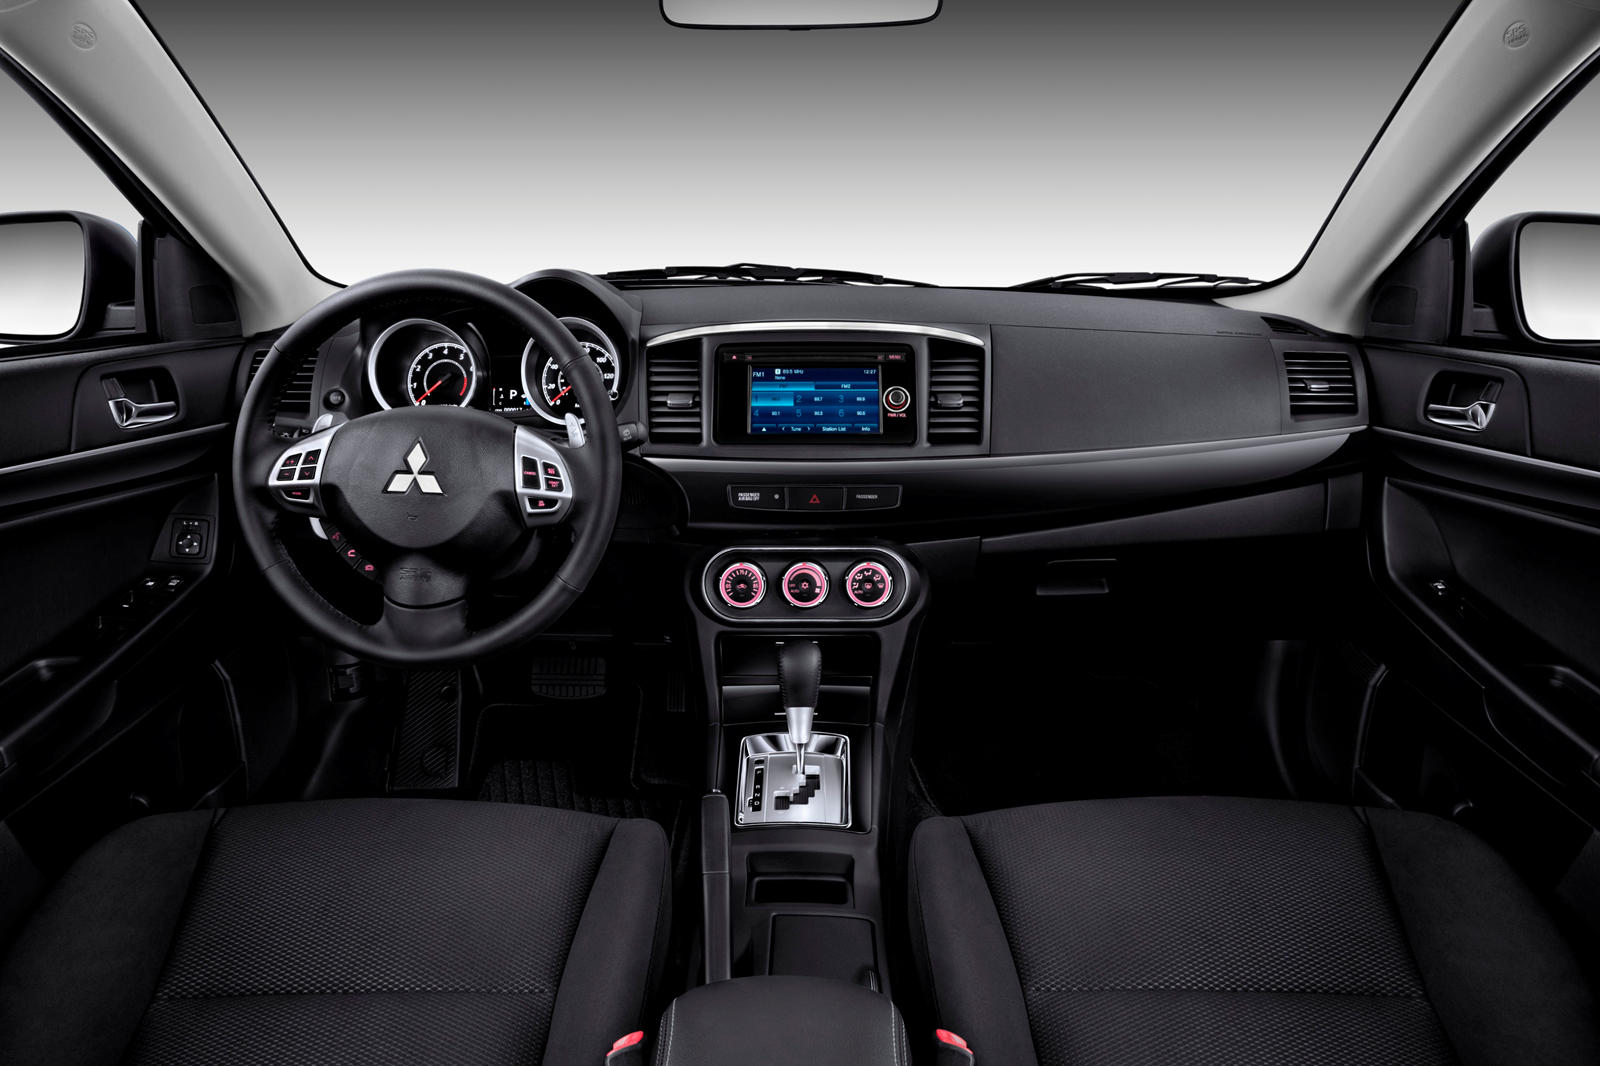 2010 Mitsubishi Lancer Sportback Interior Photos | CarBuzz